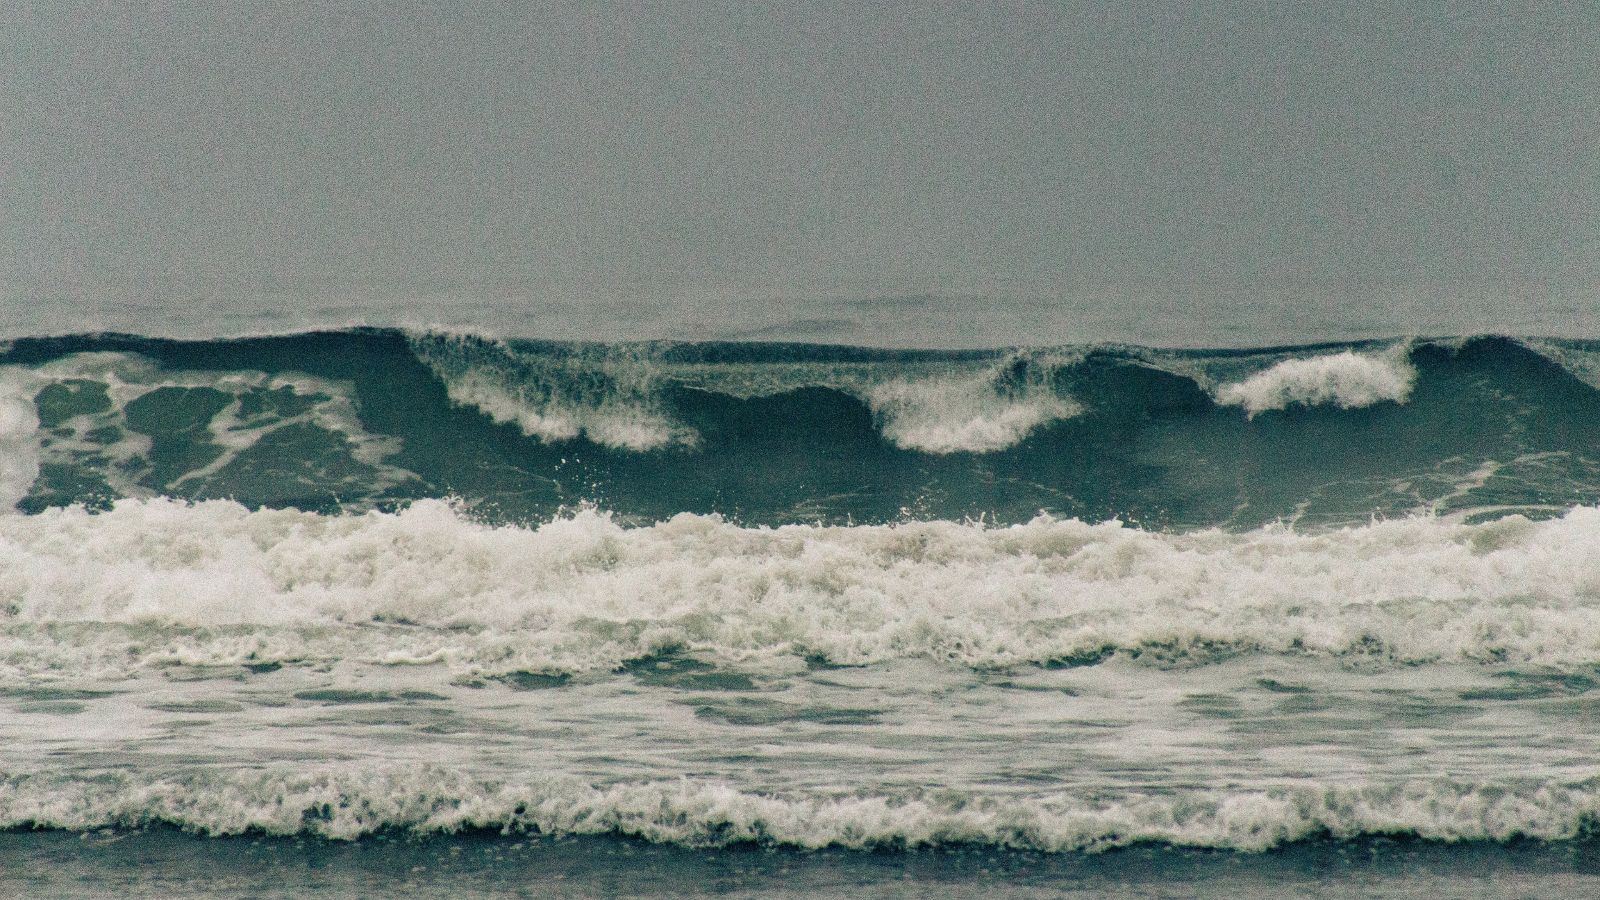 Big ocean waves approaching the shore